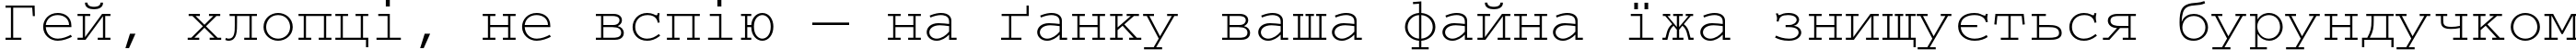 Пример написания шрифтом CourierC текста на украинском